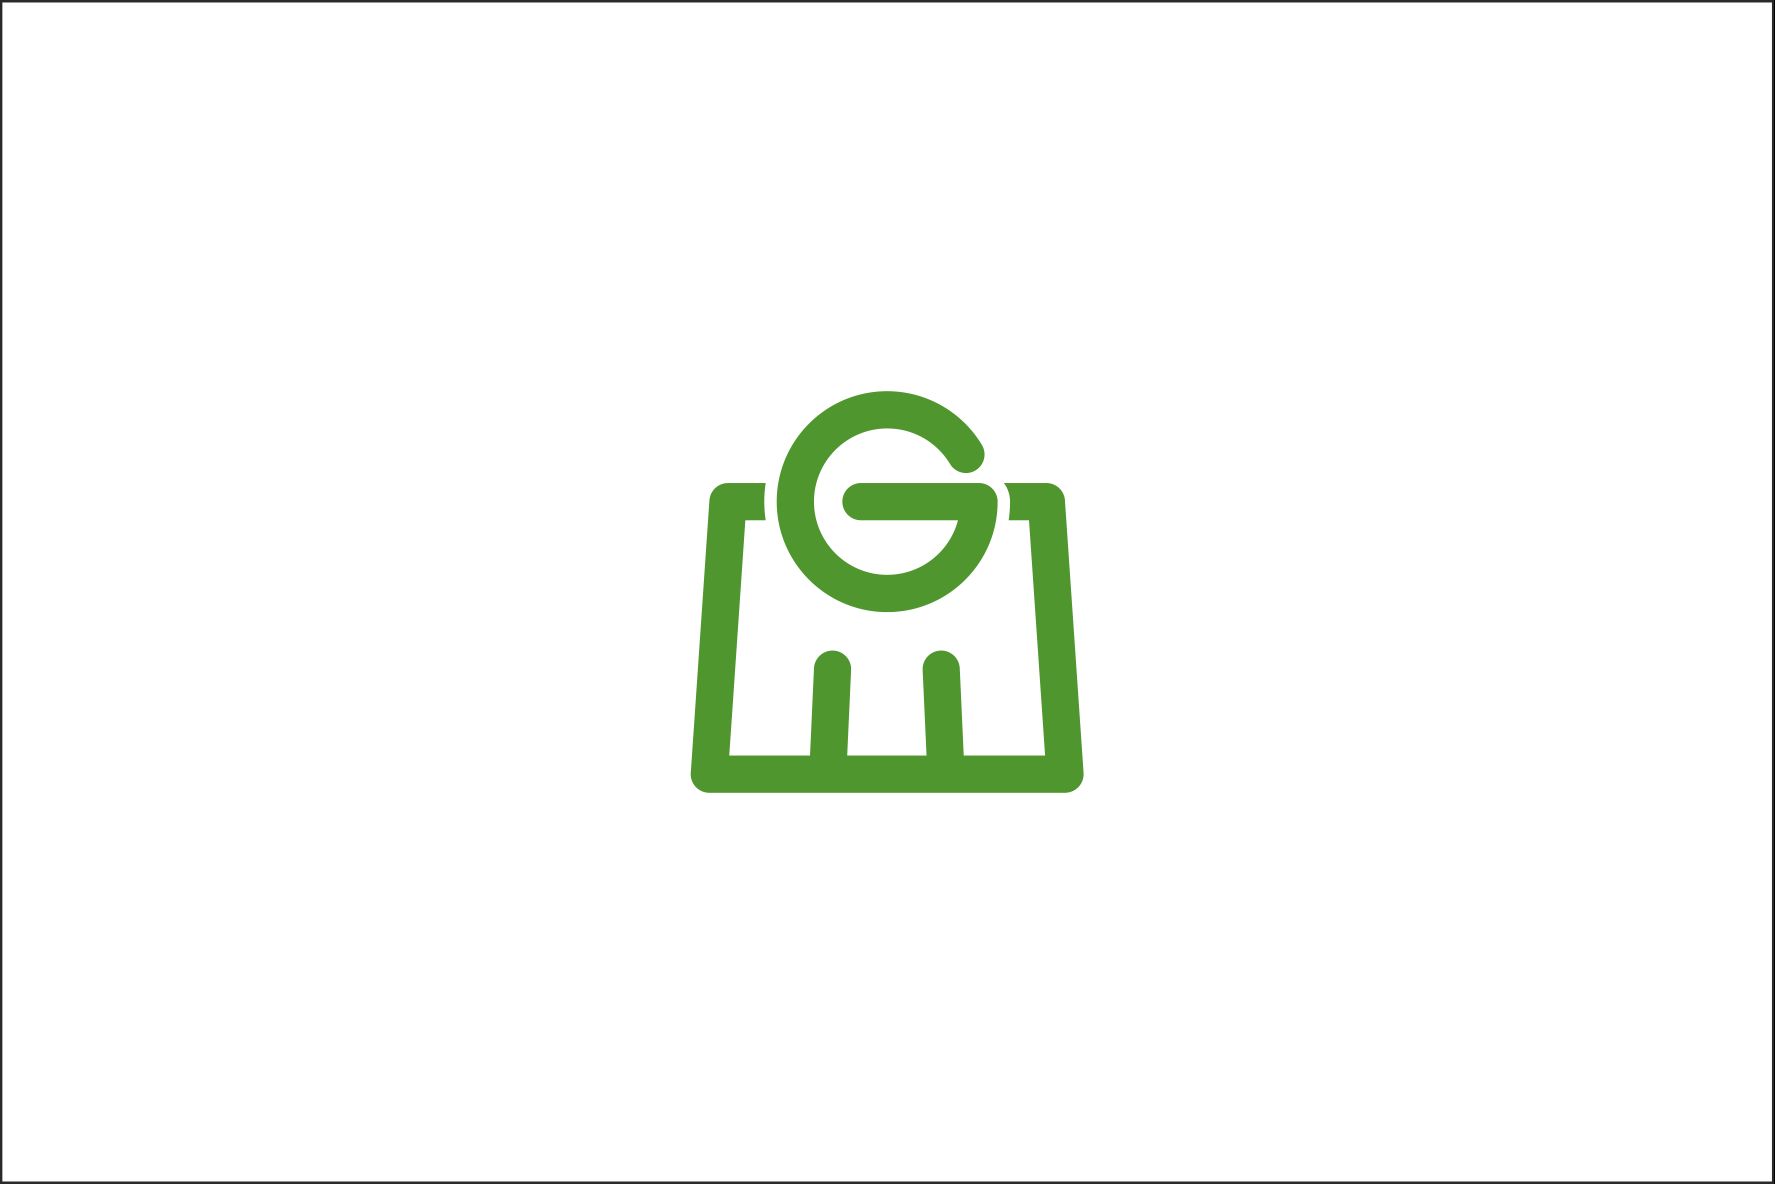 Логотип для Gipermall.by / ГиперМолл - дизайнер erkin84m